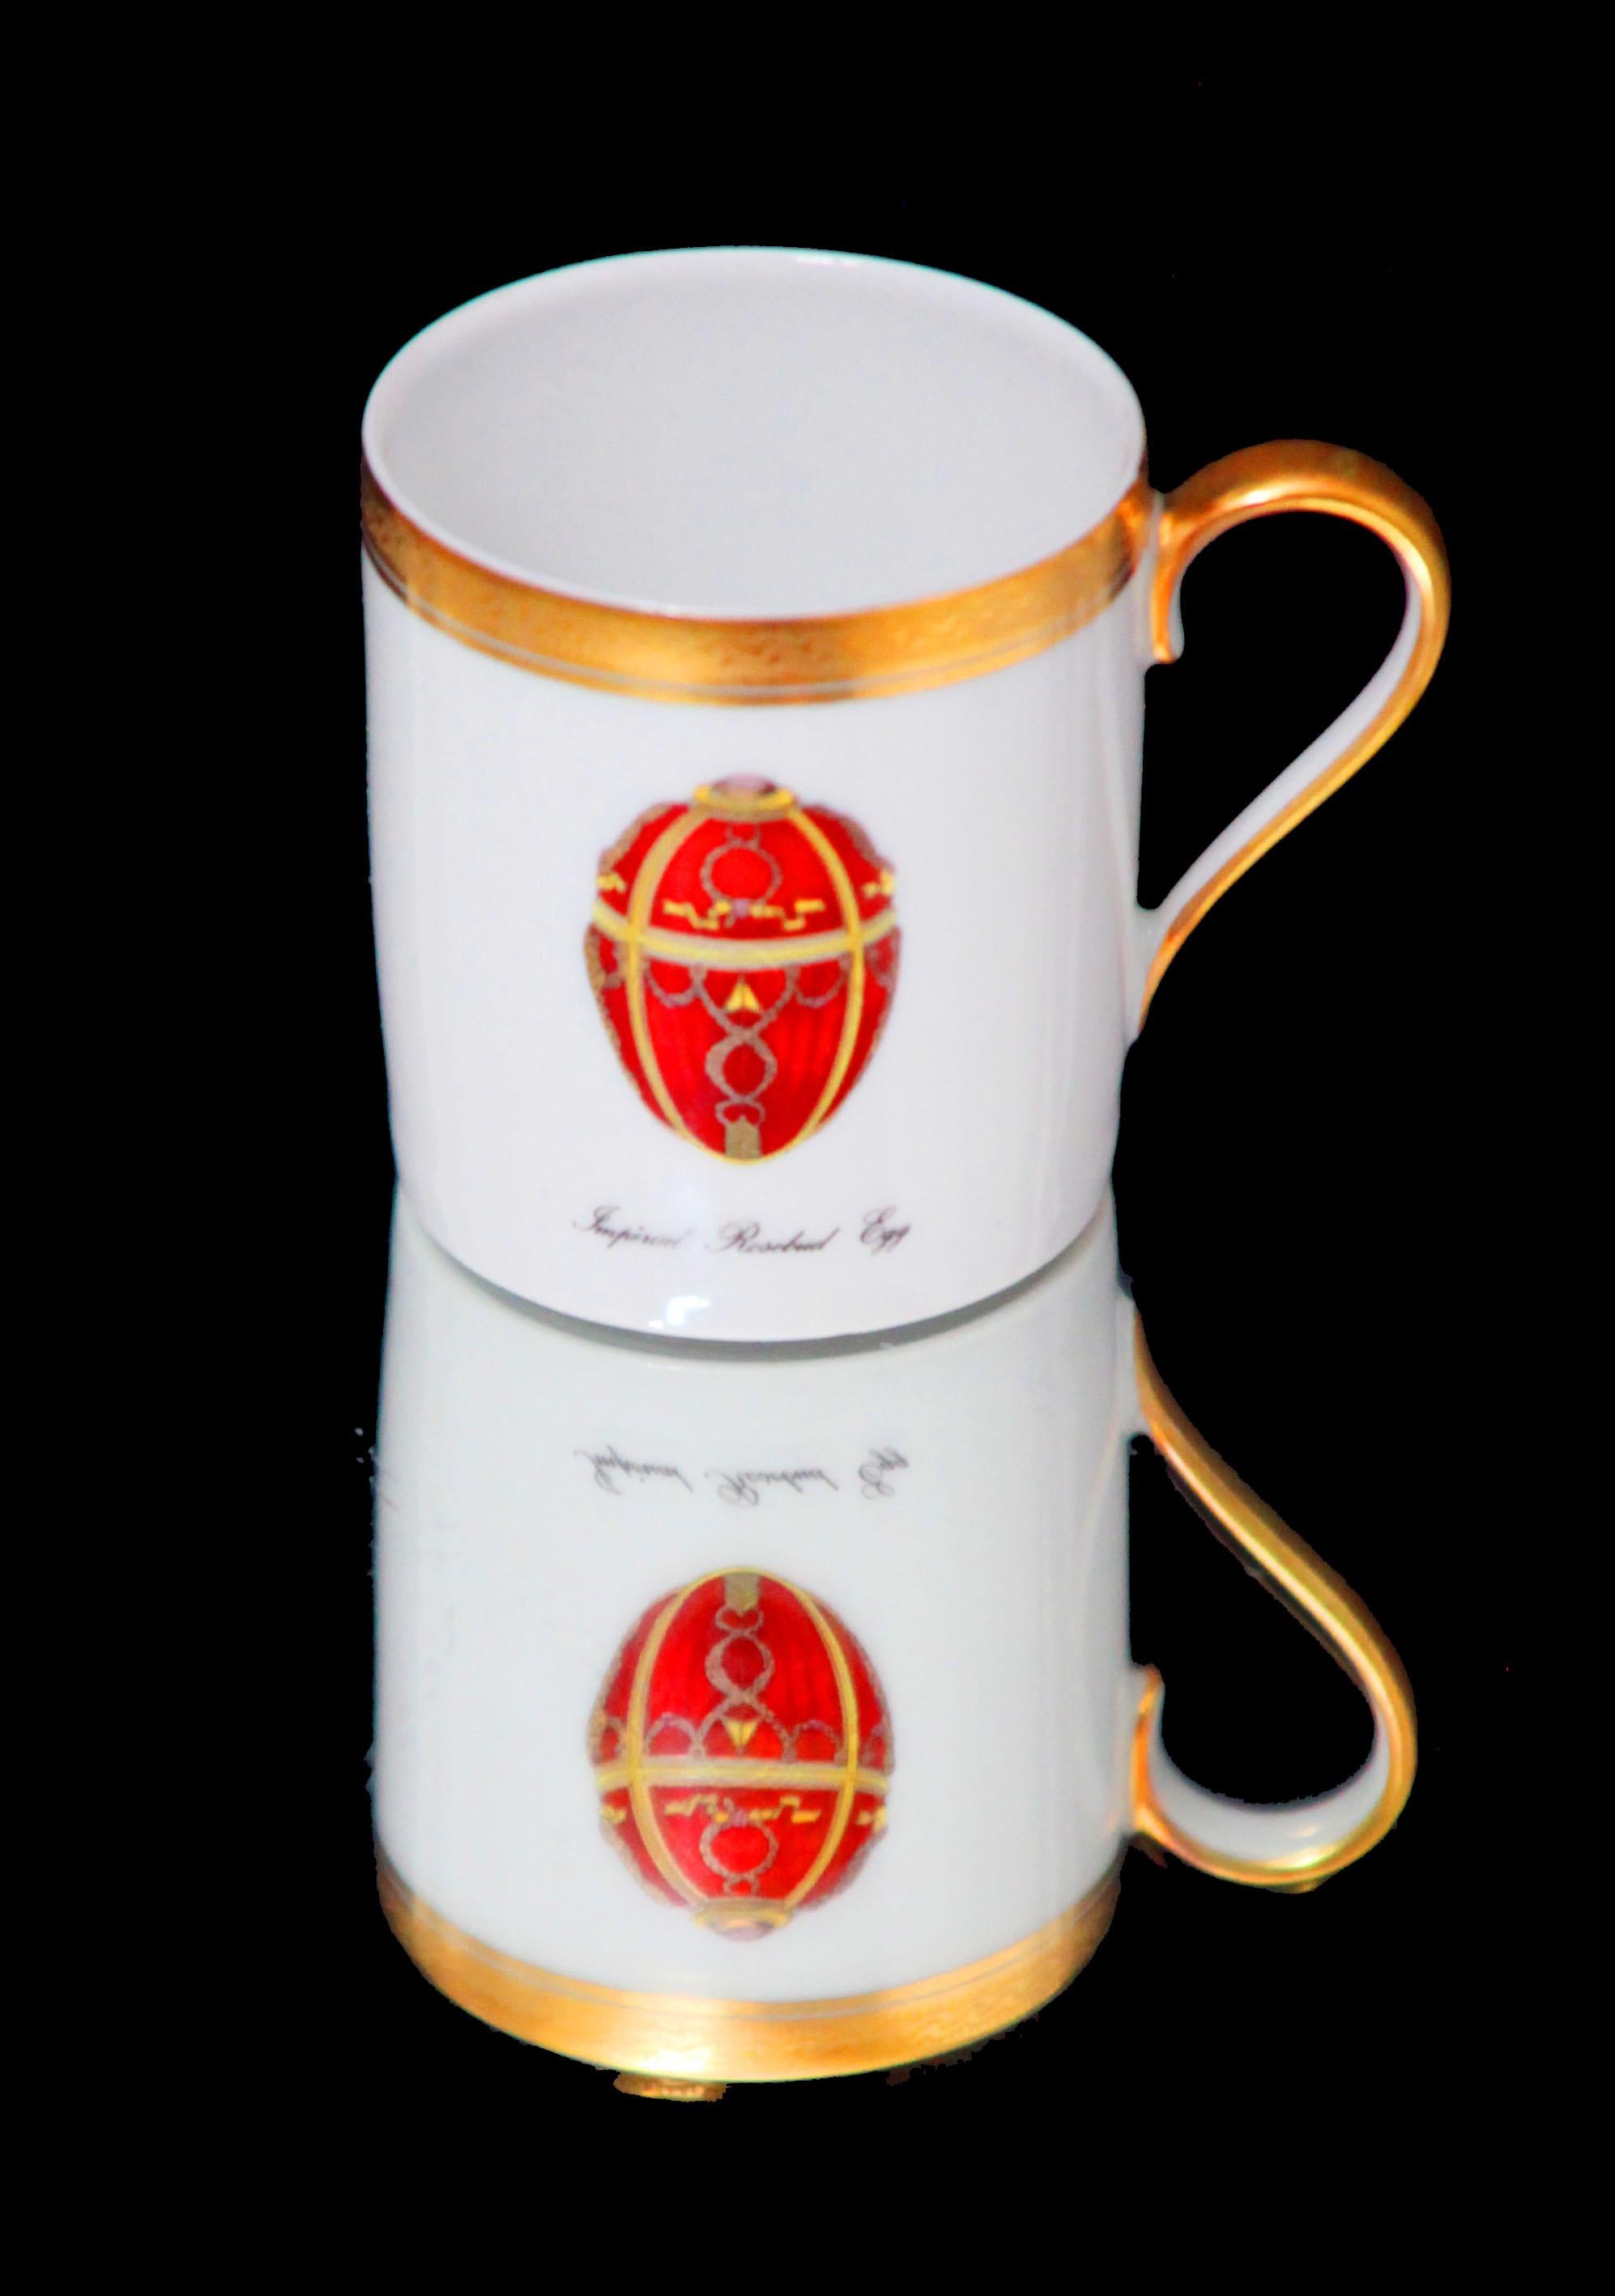 Puiforcat (Hermes), Christofle, Faberge - 5pc. French 950 Sterling Tea Set For Sale 11